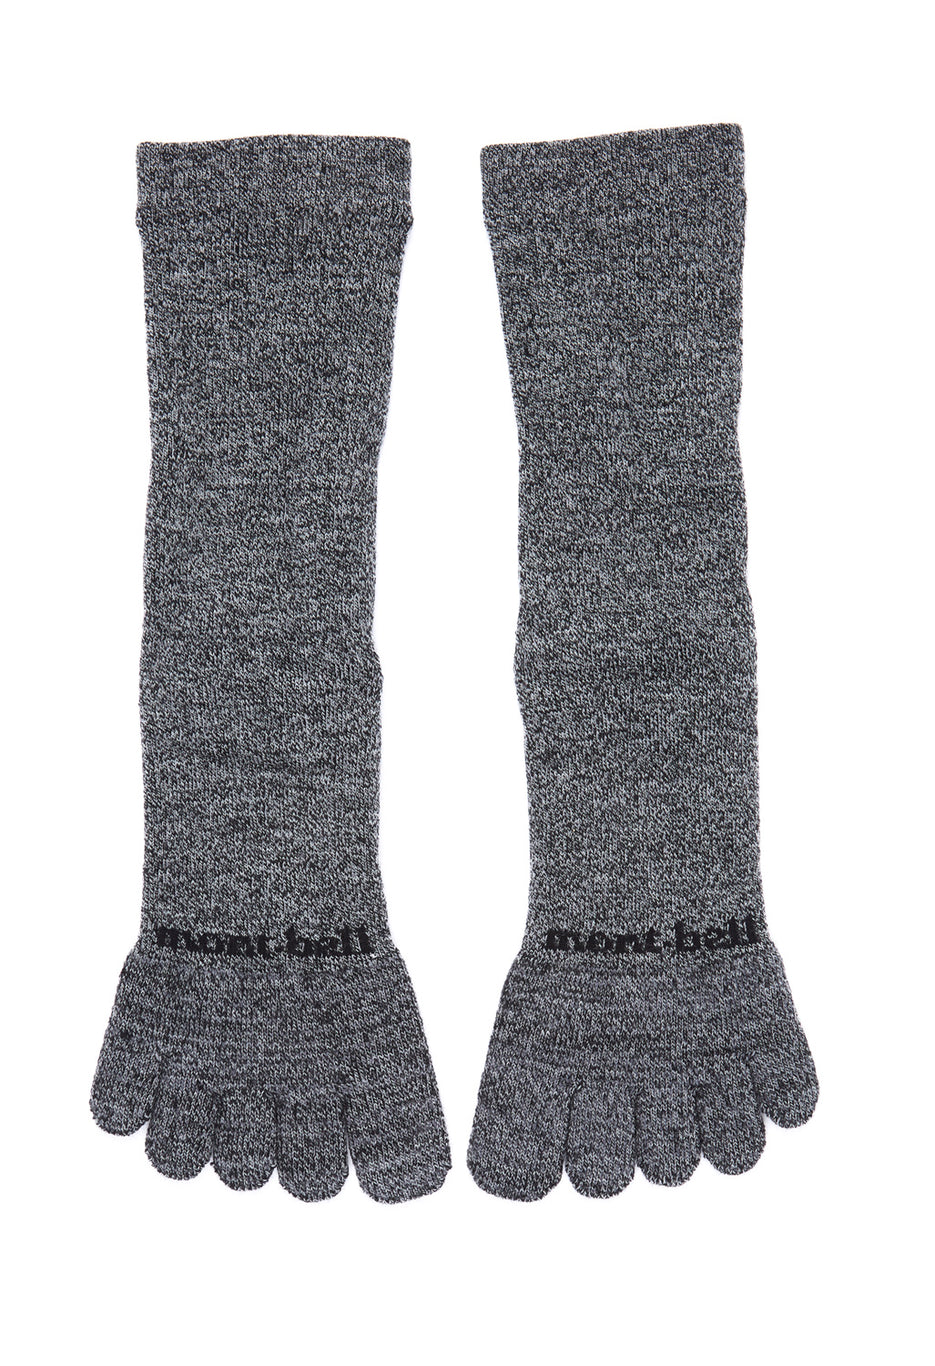 Montbell Merino Wool Trekking 5 Toe Socks - Heather Charcoal